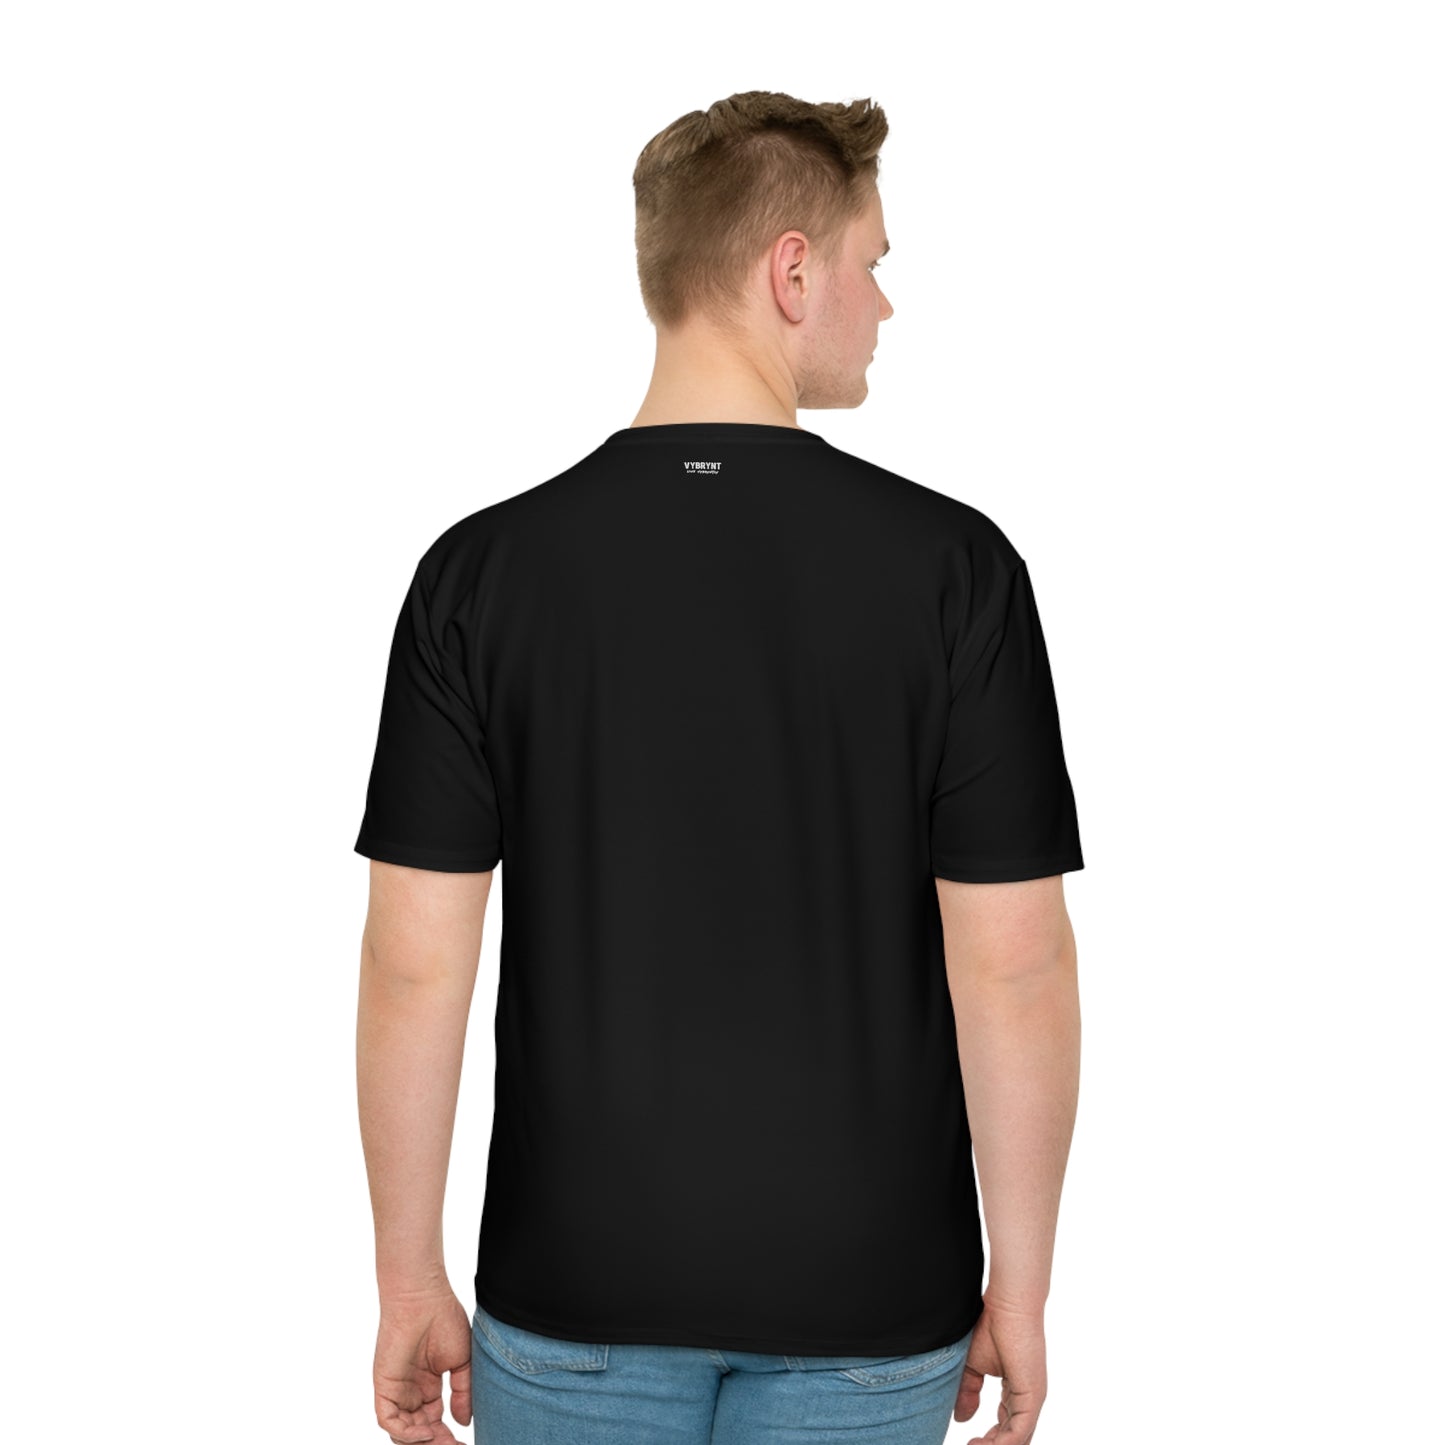 Urban Strength Men's Black T-shirt